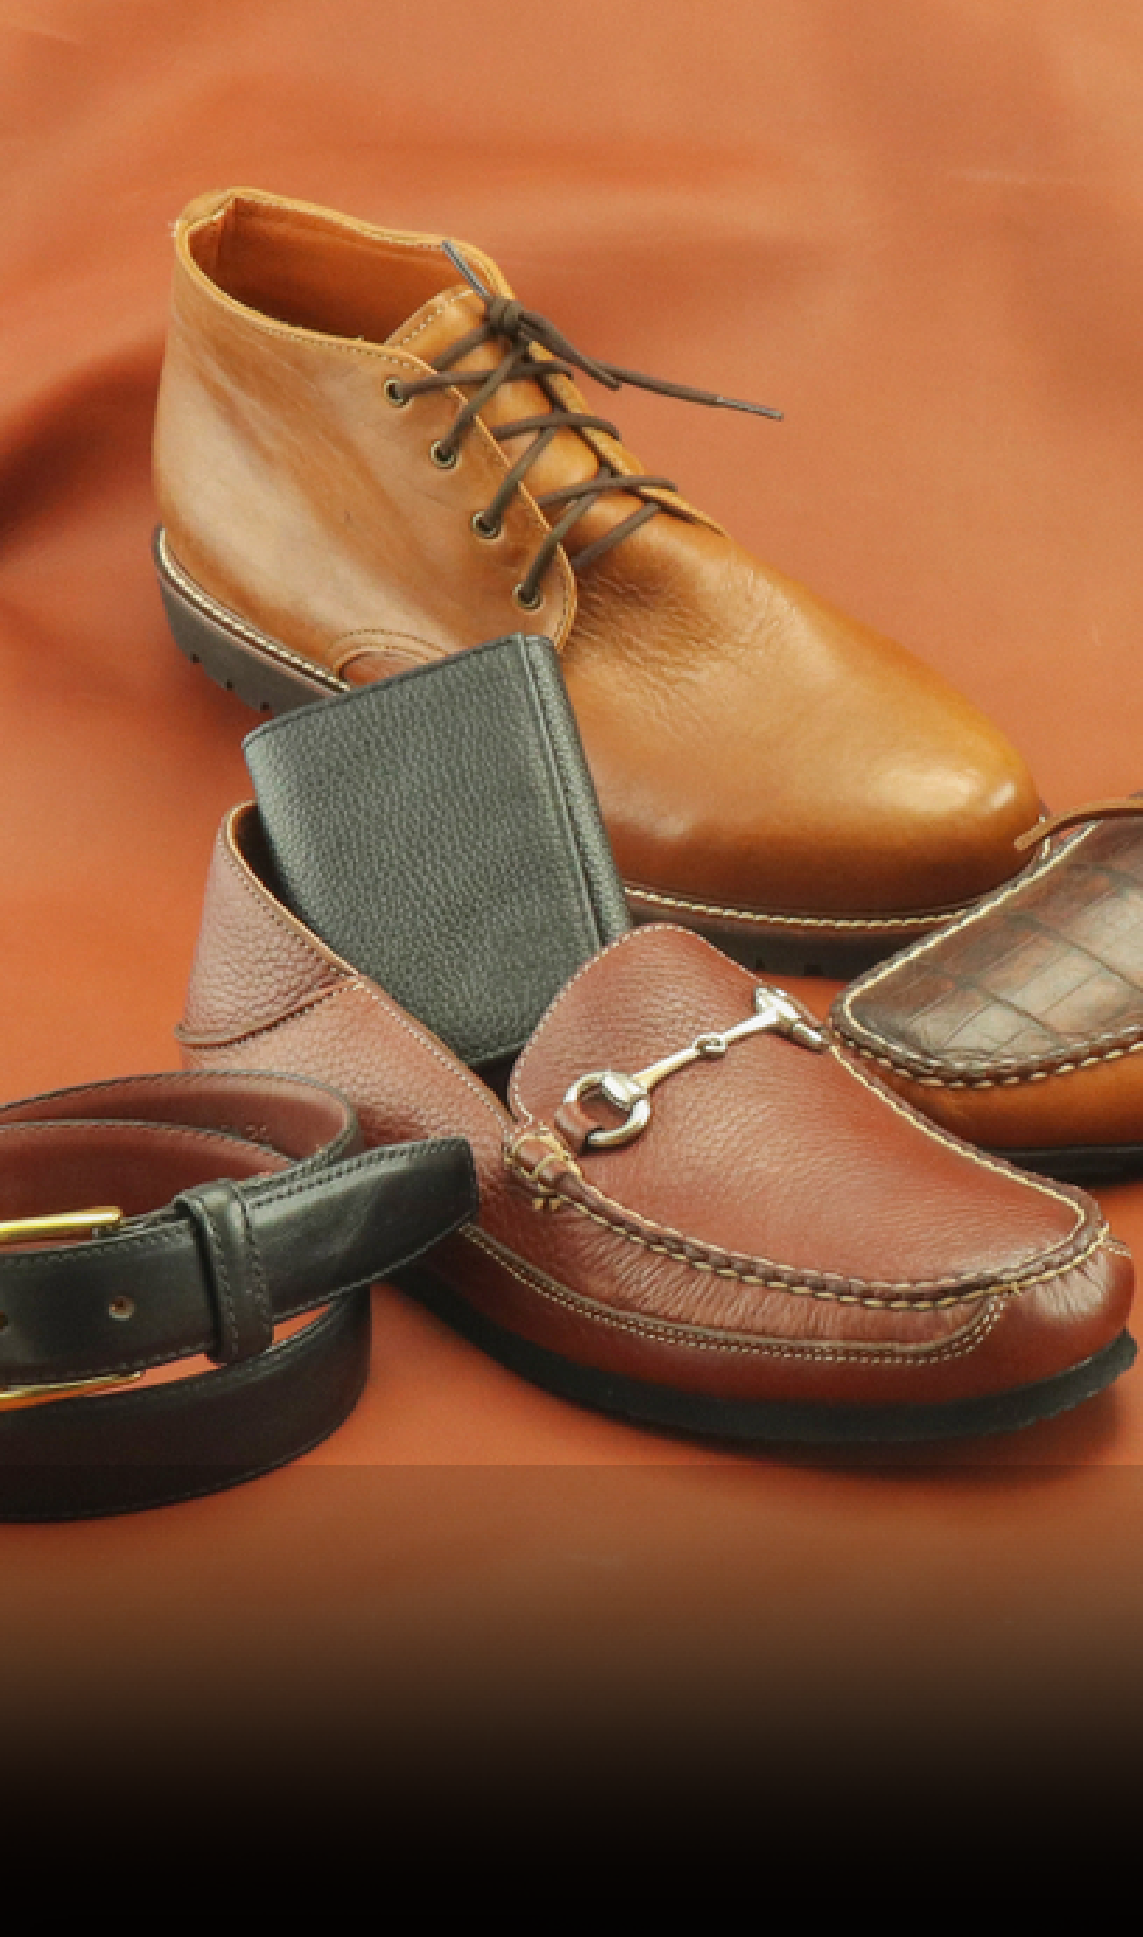 Leather Goods & Footwear